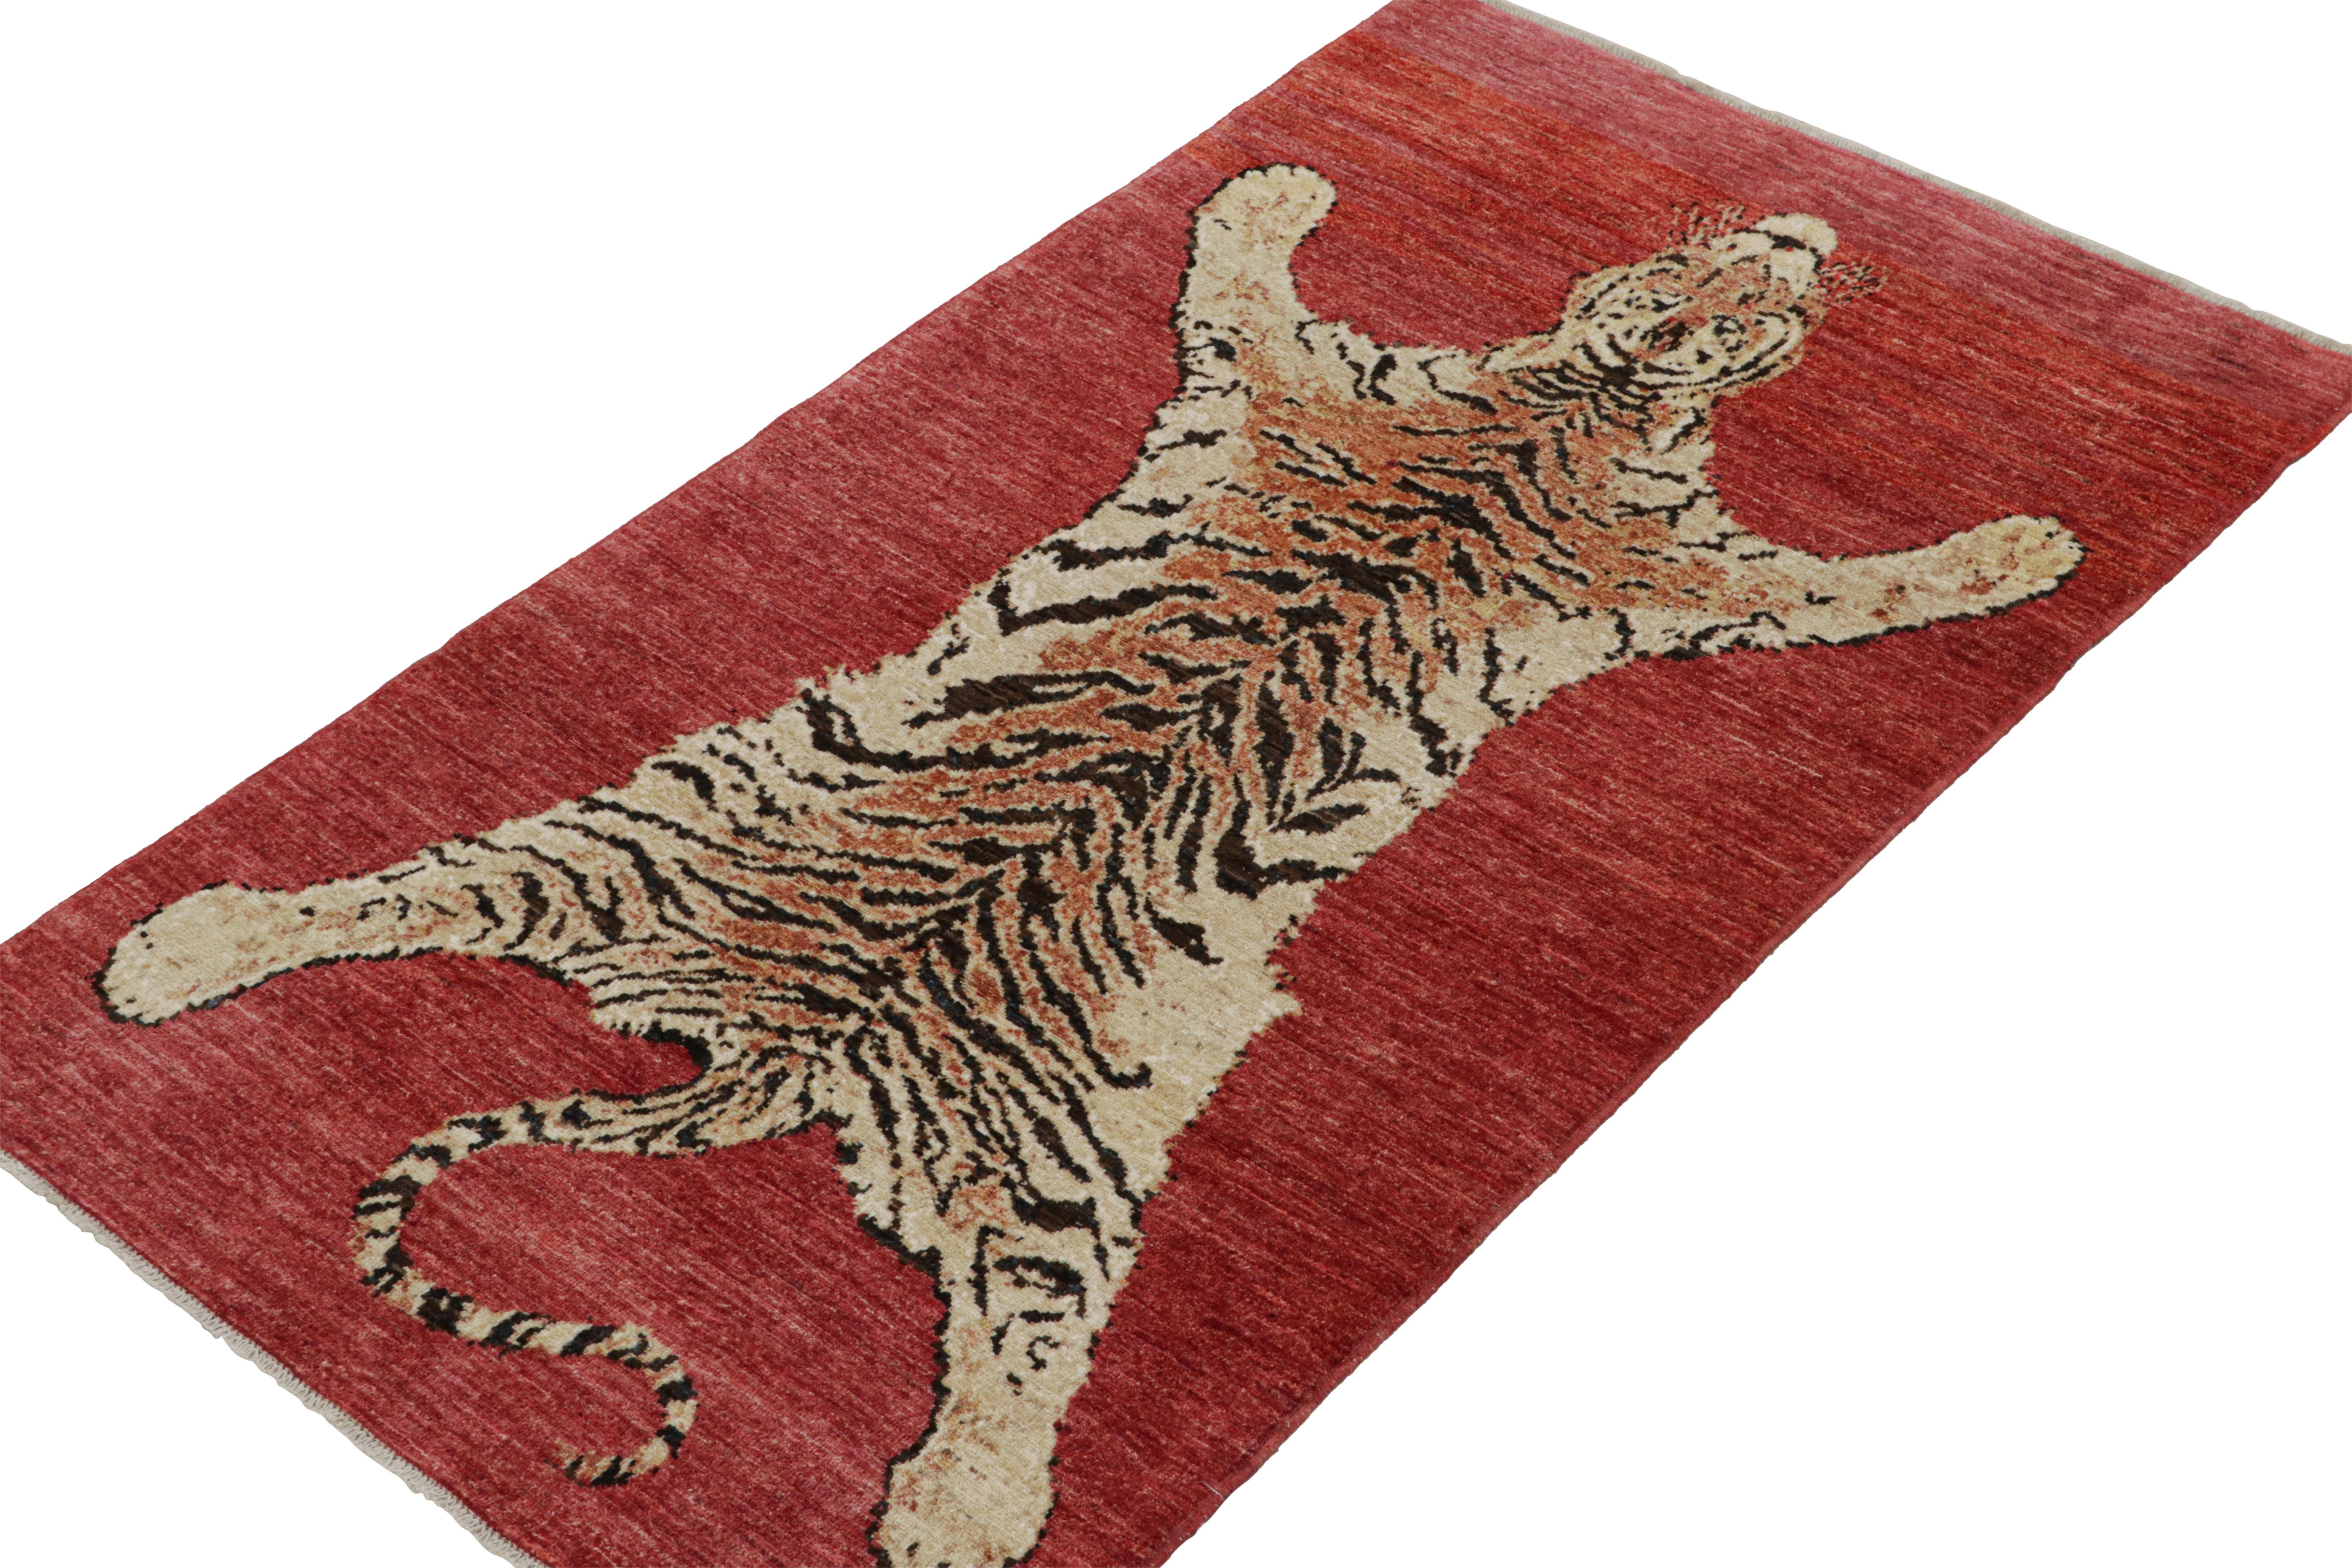 Afghan Rug & Kilim’s Tiger-Skin Rug in Red with Beige-Brown Pictorial For Sale